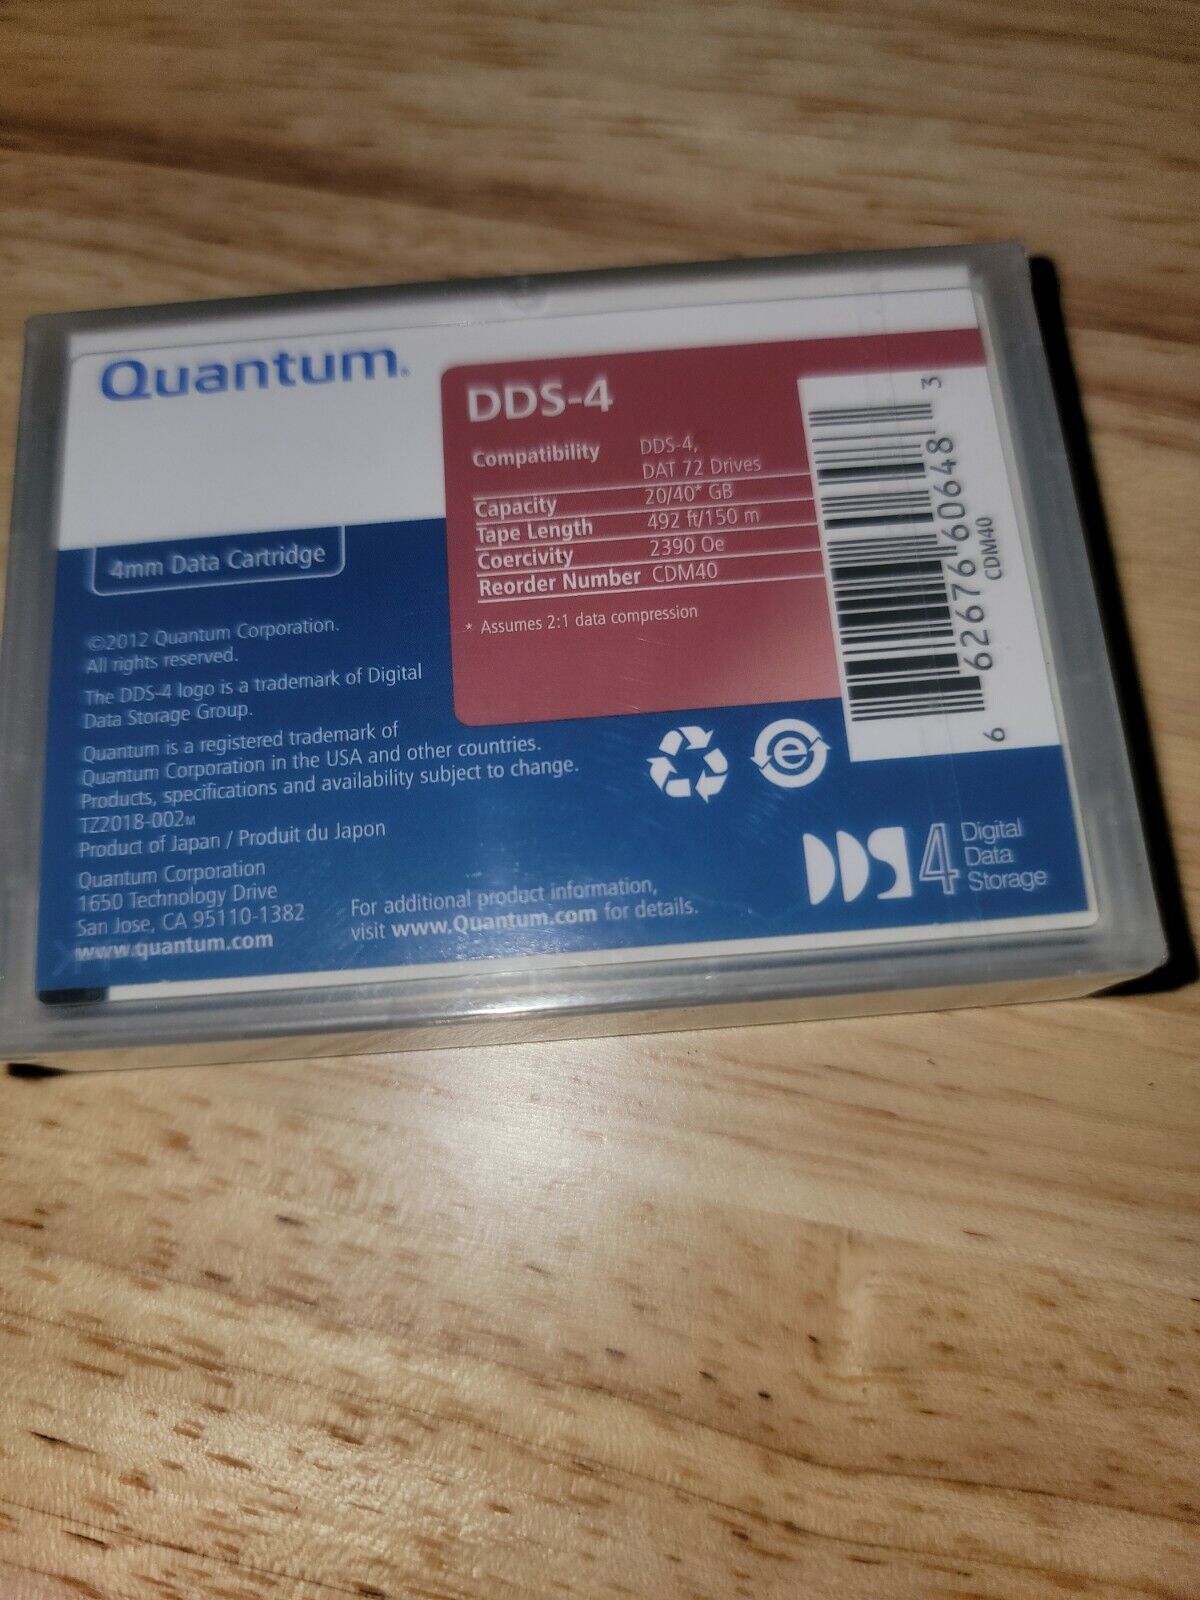 Quantum DDS – 4   20 / 40 GB 4mm Data Cartridge